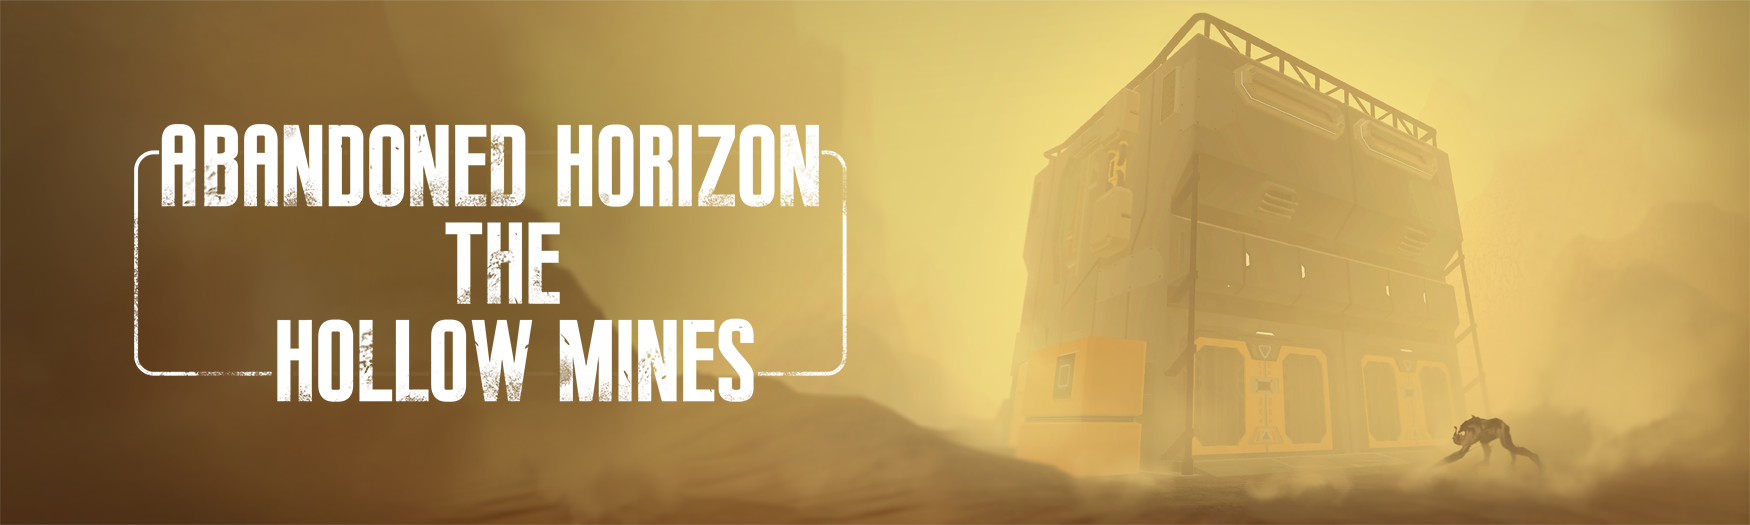 Abandoned Horizon: The Hollow Mines